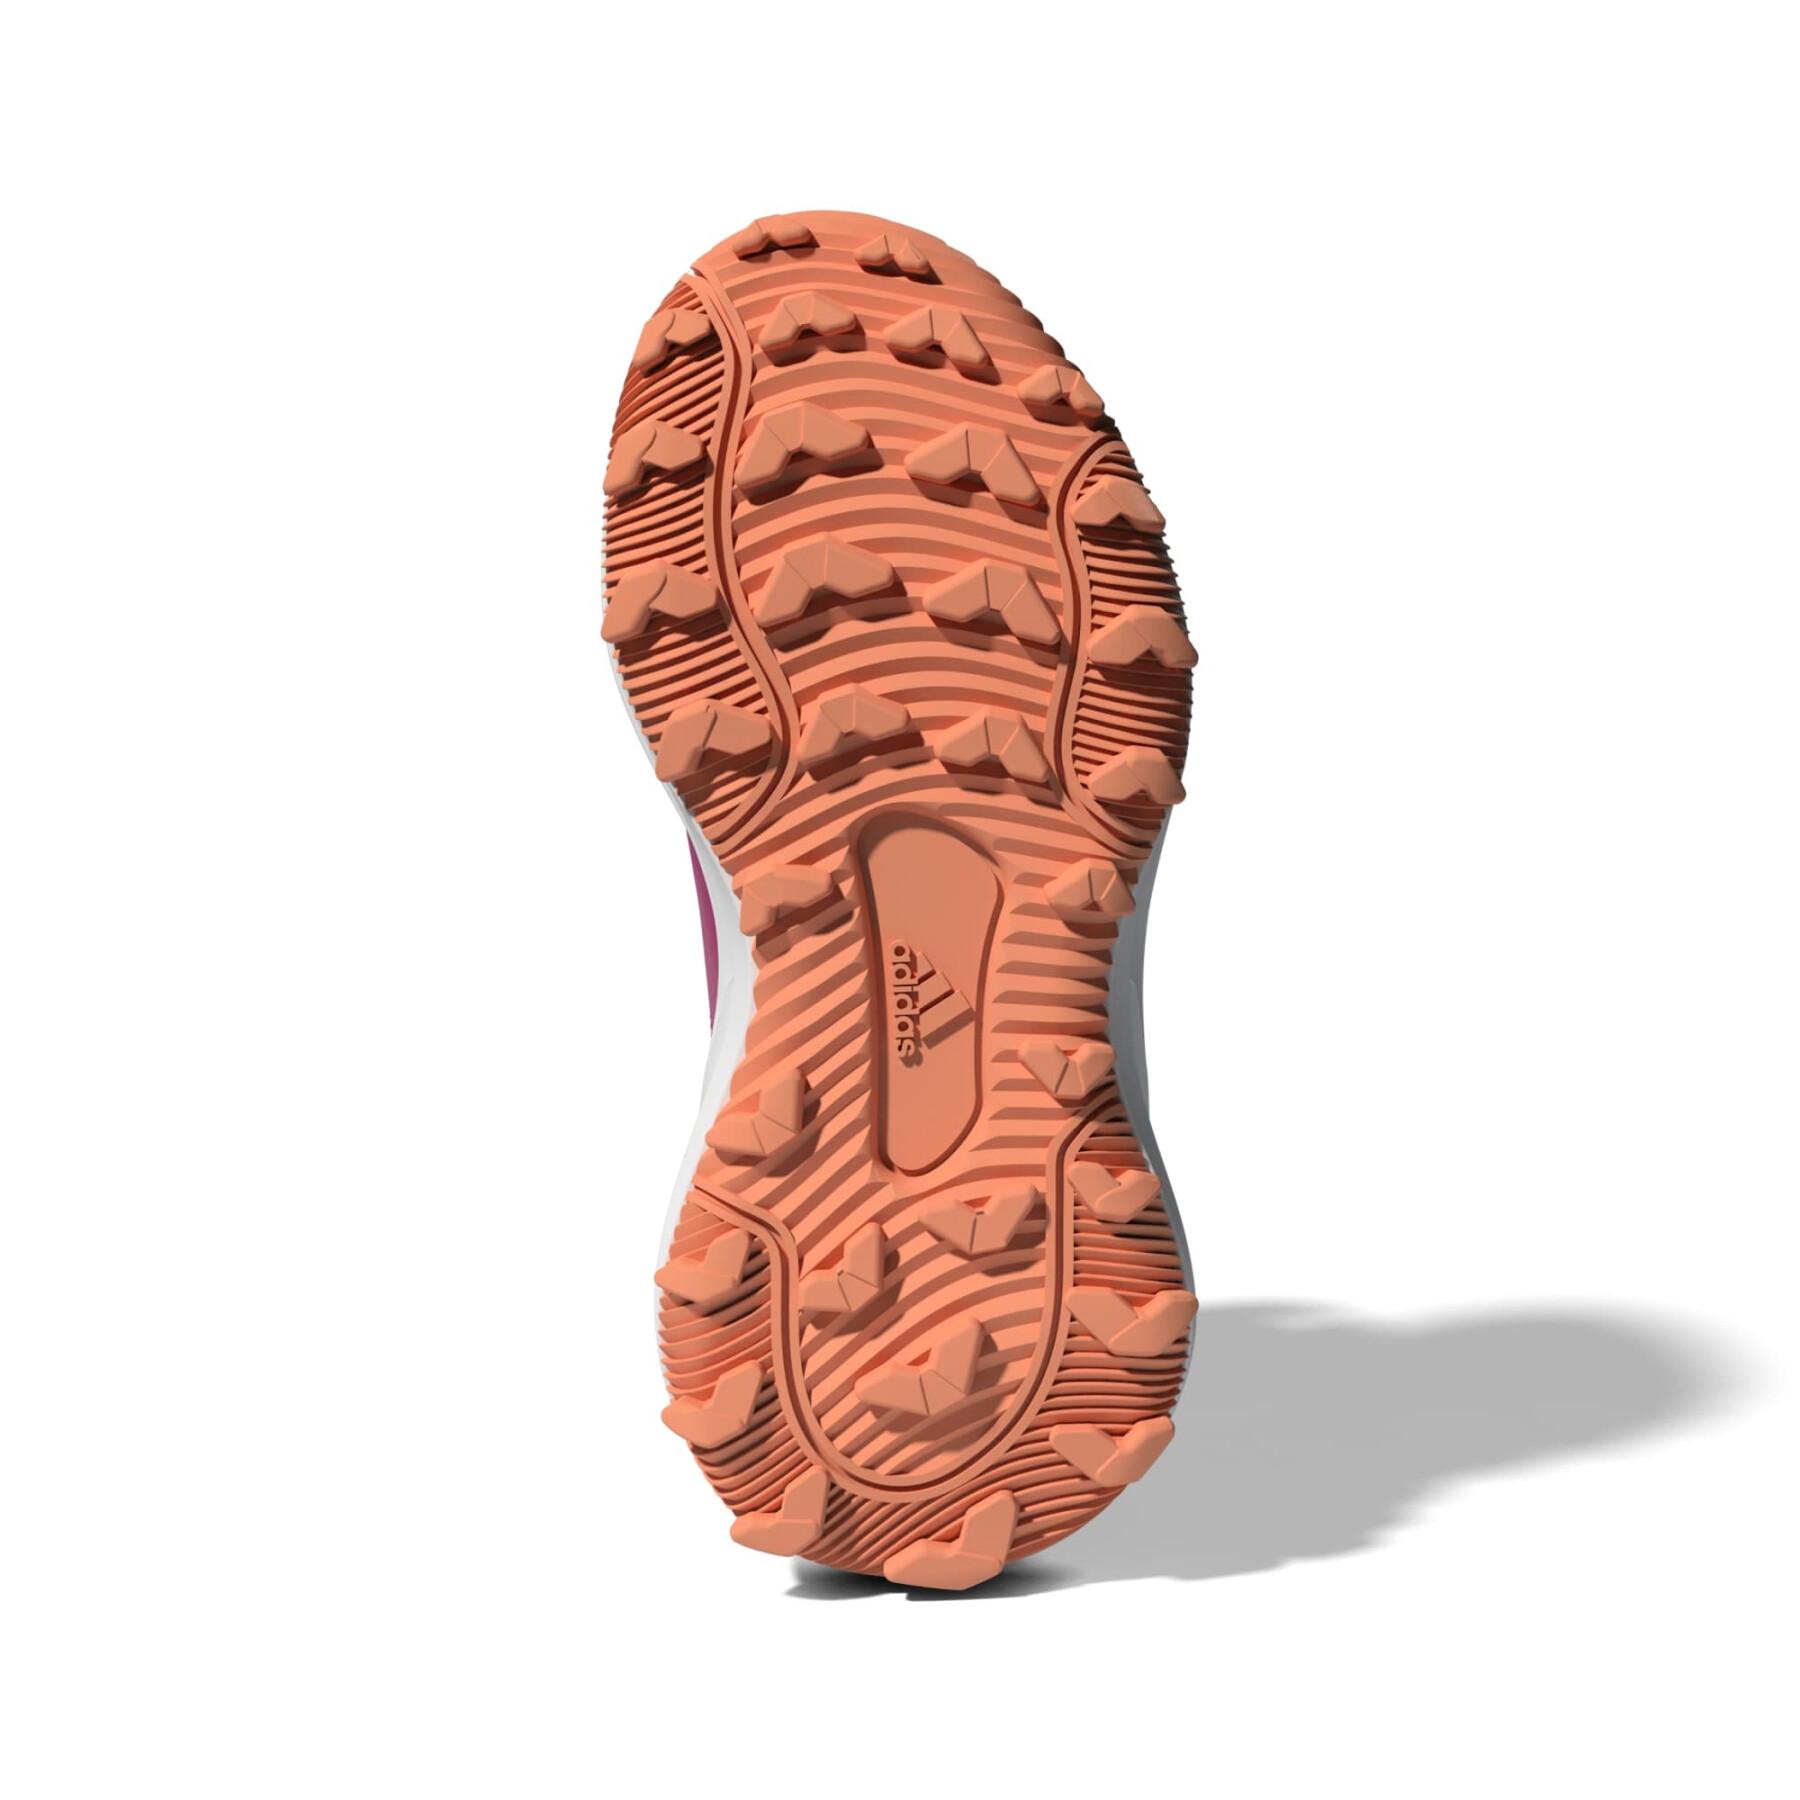 Zapatillas de running niña adidas Fortarun All Terrain Cloudfoam Sport